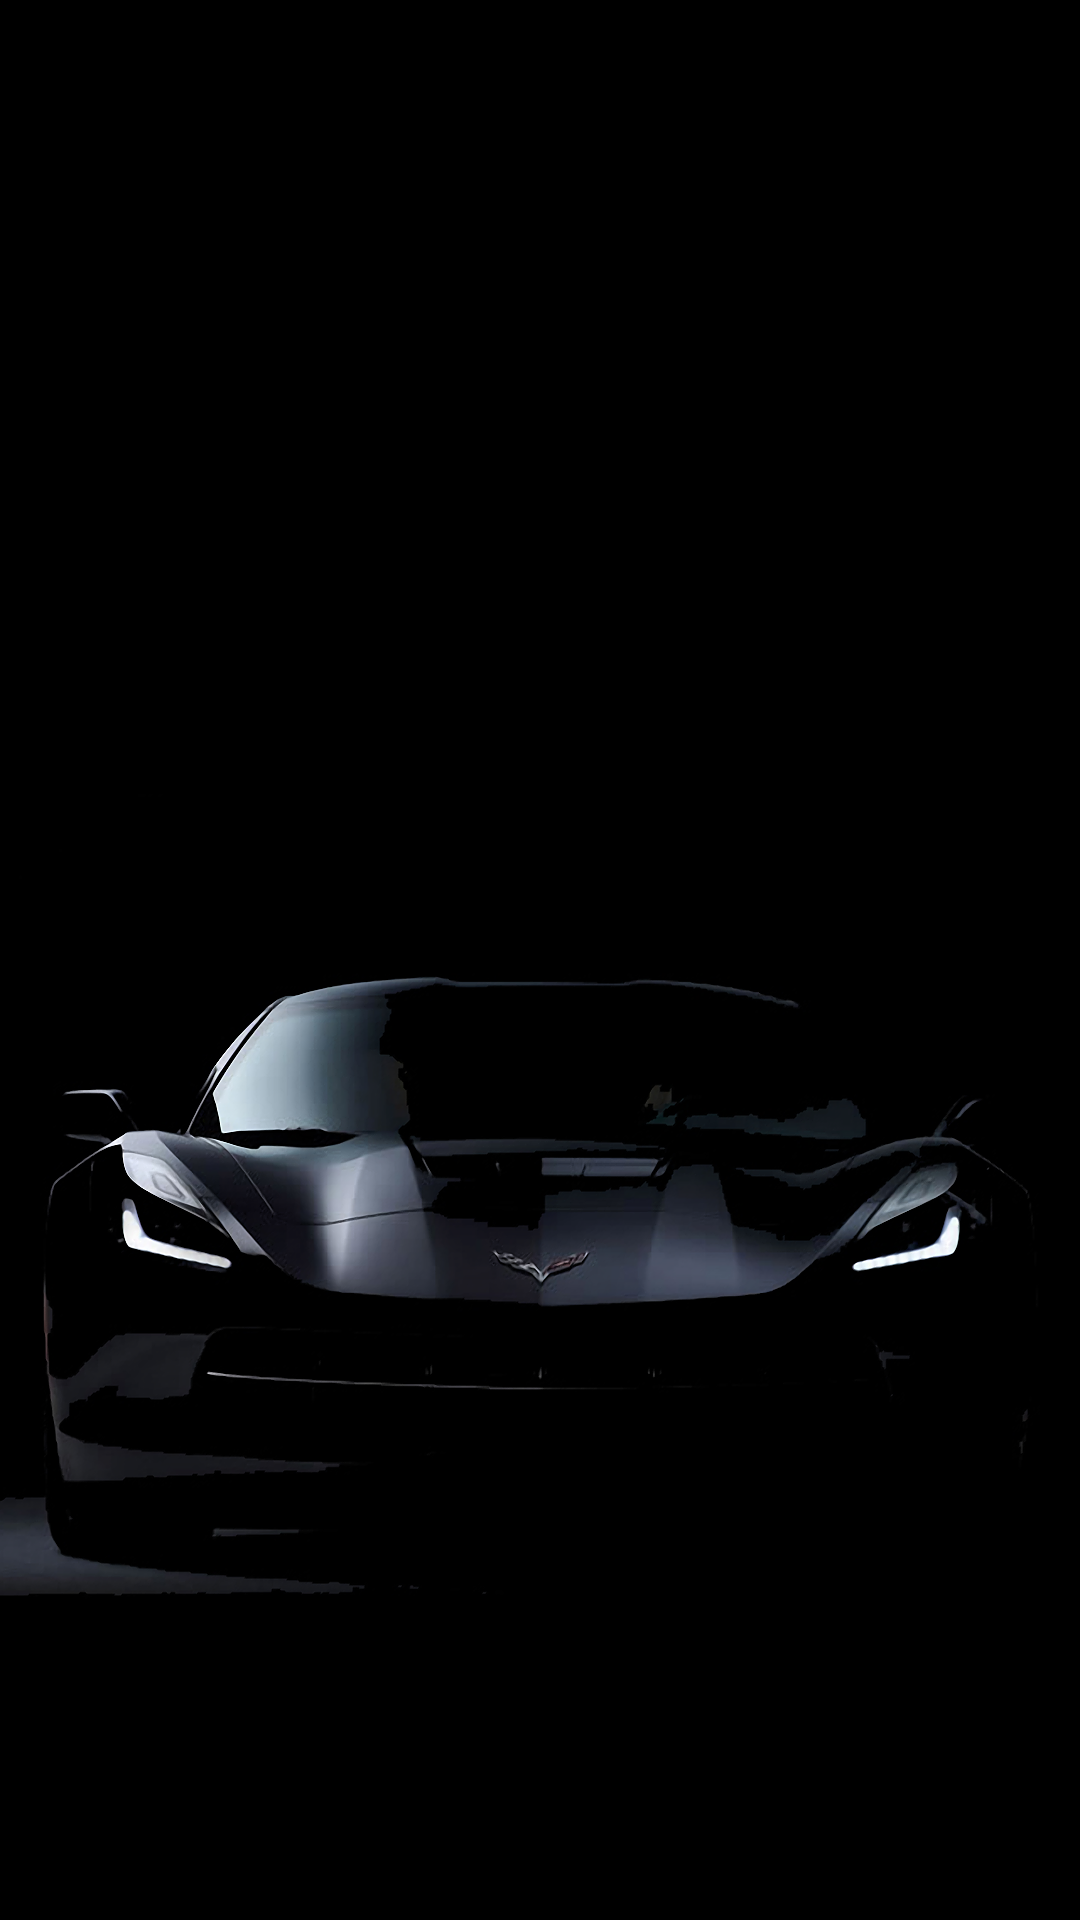 Corvette Stingray Dark iPhone Wallpaper